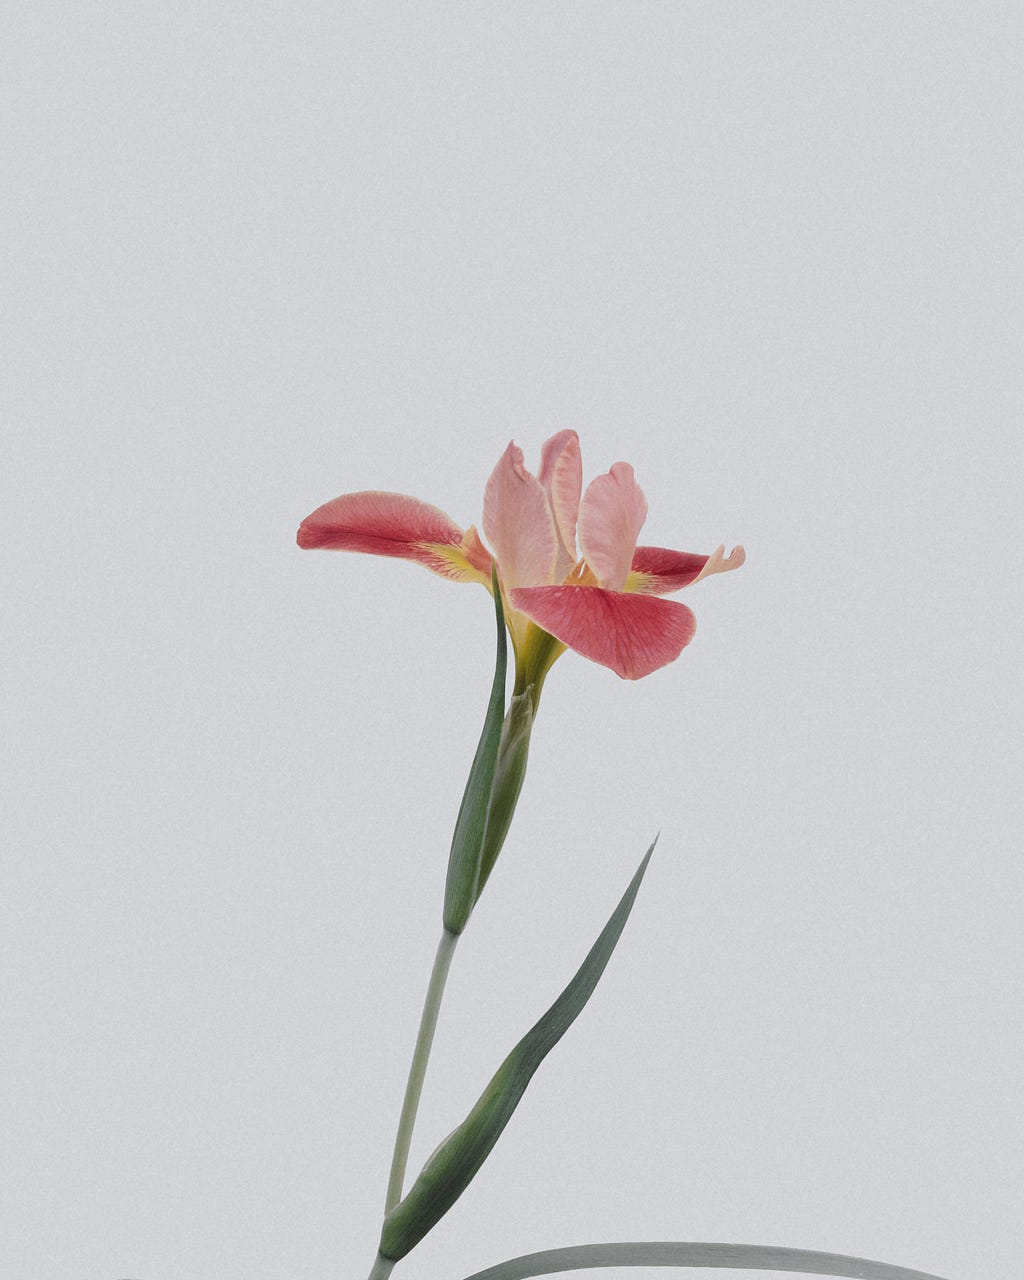 A single pink orchid flower symbolizing feminity